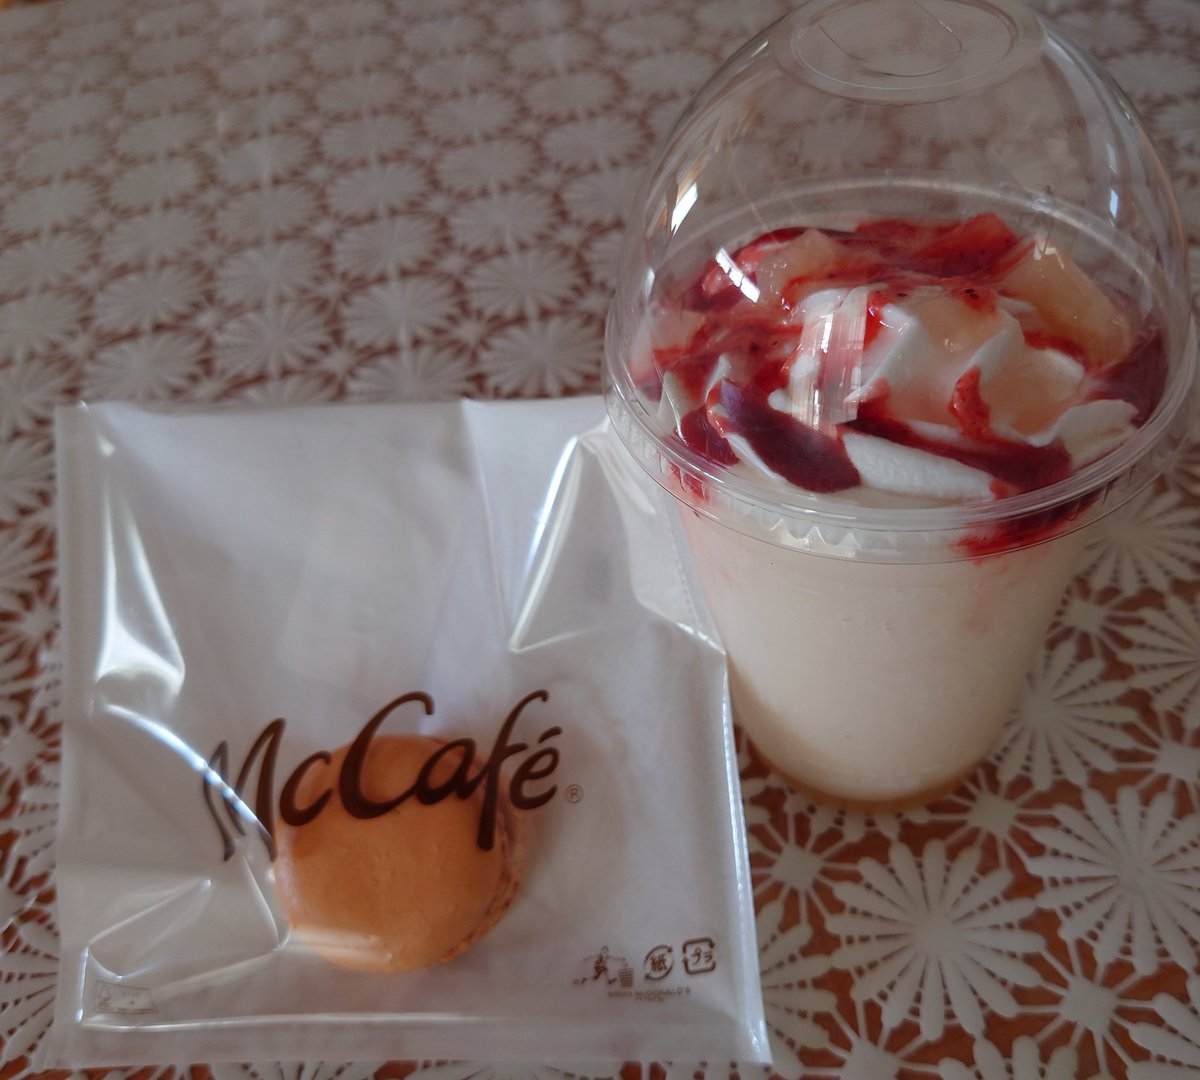 #McCafe
美味しかった😋